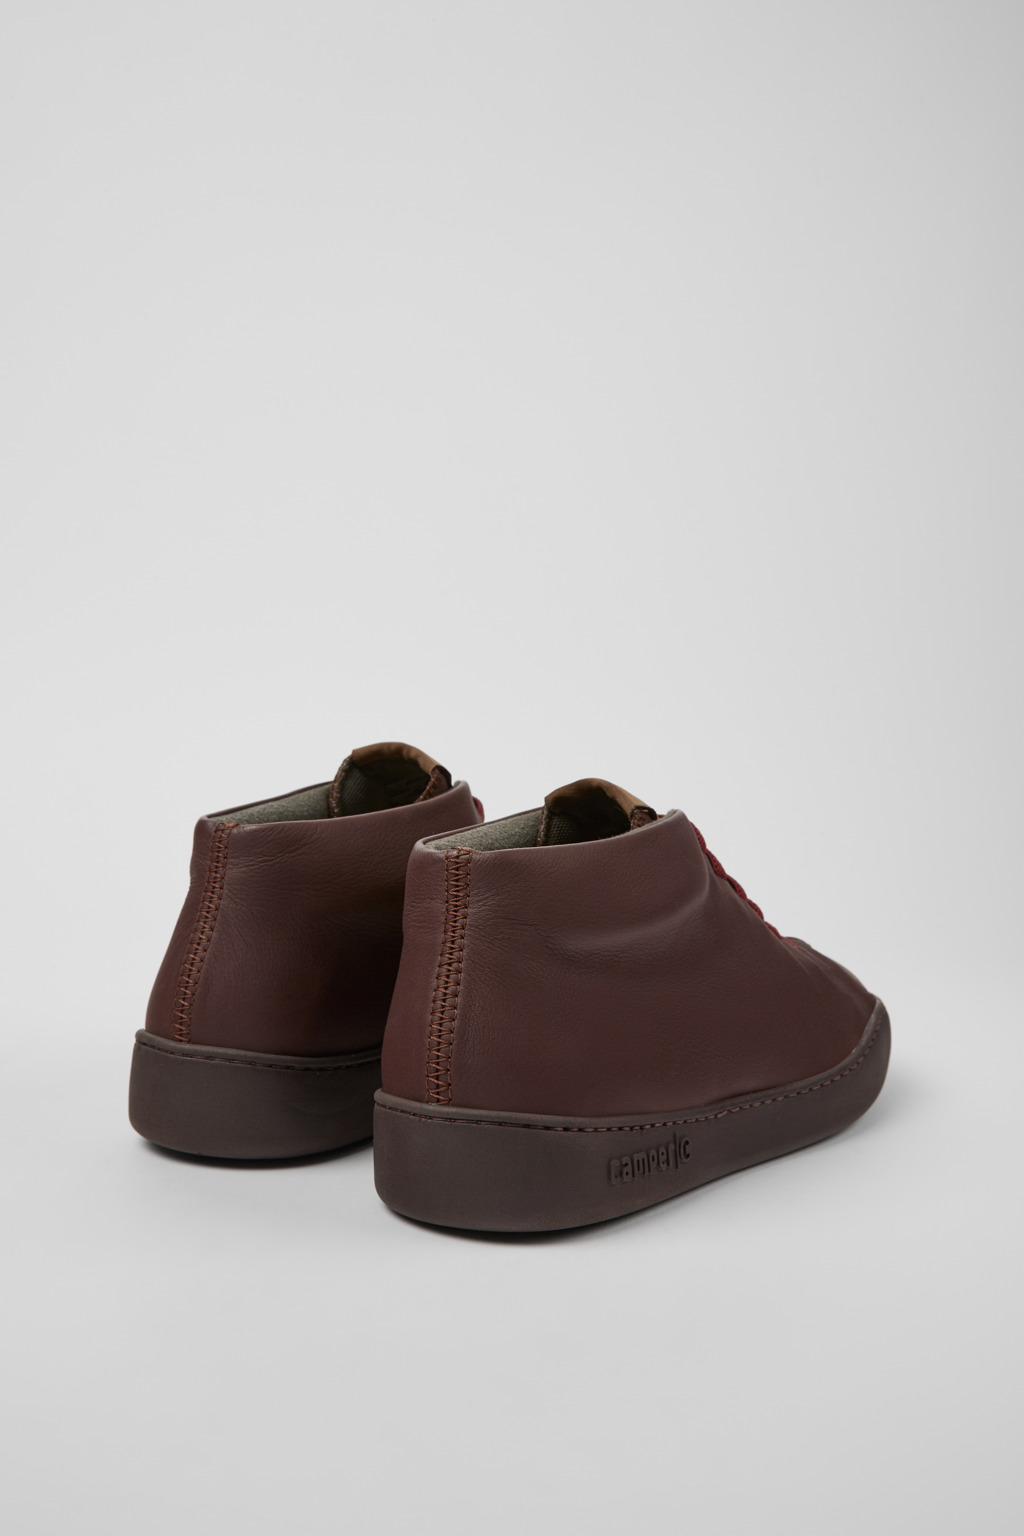 Peu Brown Sneakers for Men - Spring/Summer collection - Camper 